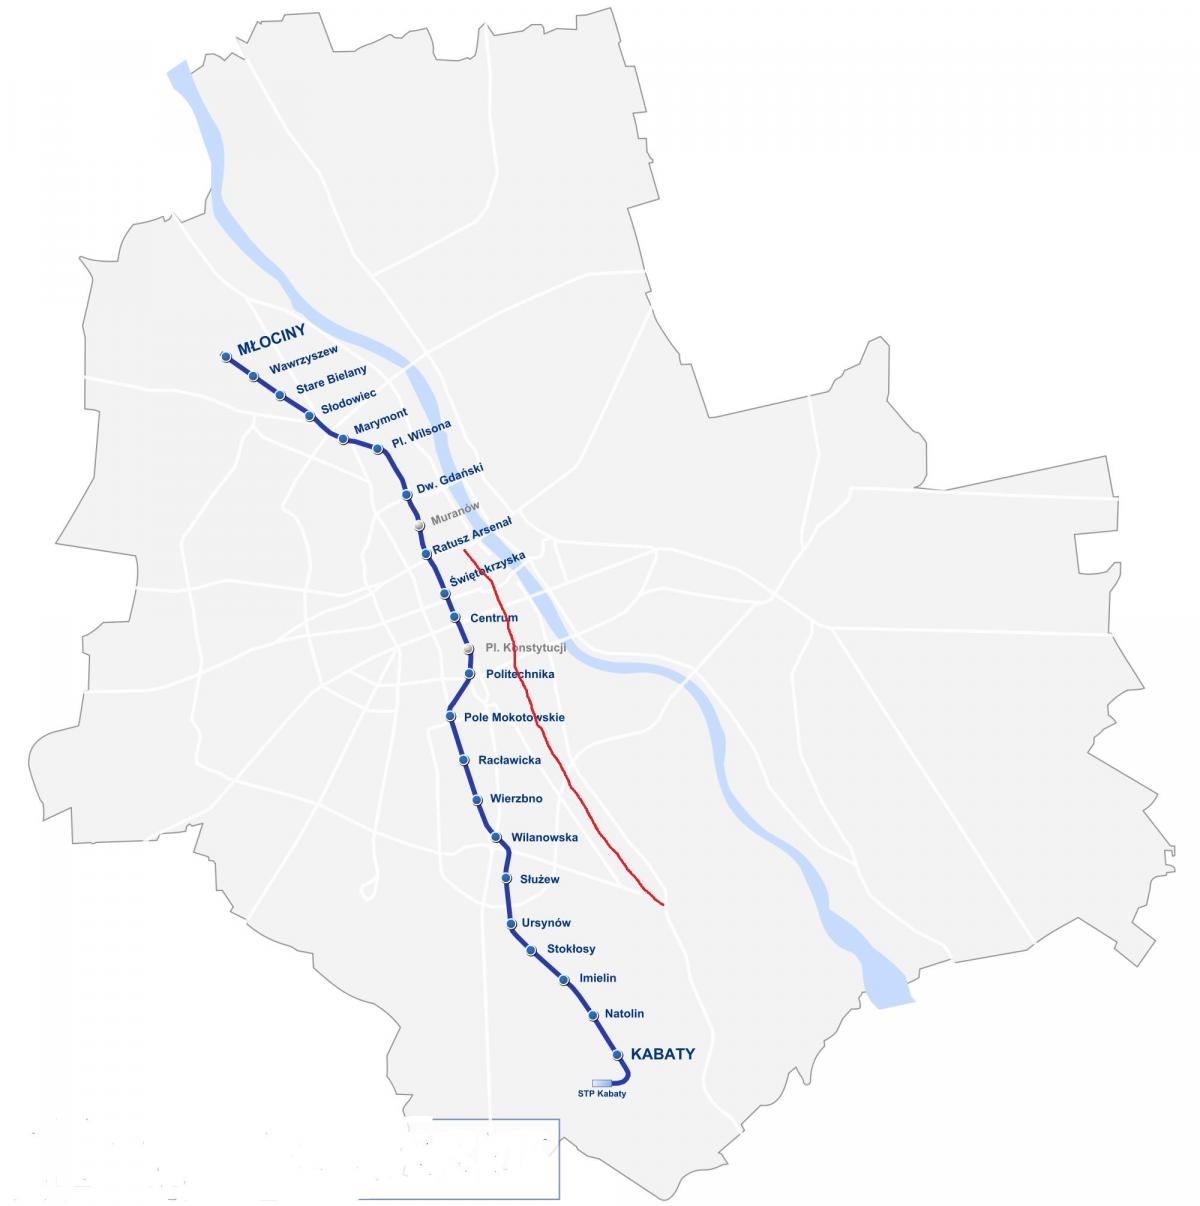 Mapa de Varsóvia, a royal route 